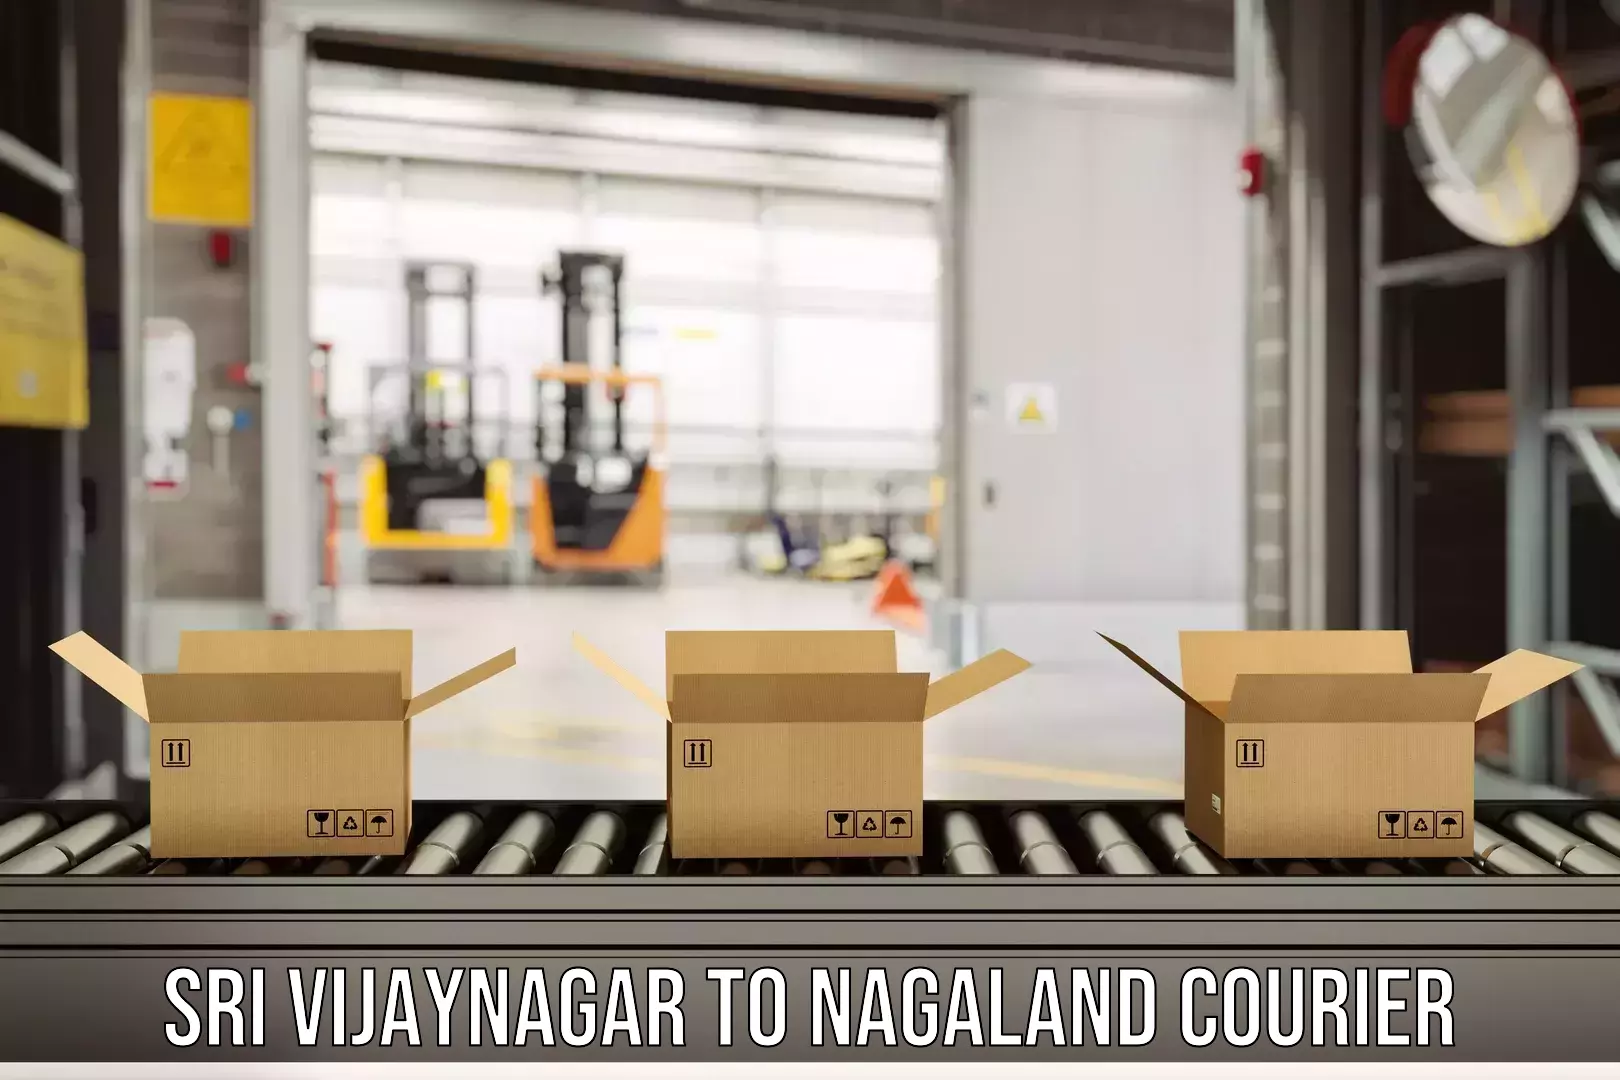 Express package handling Sri Vijaynagar to Nagaland